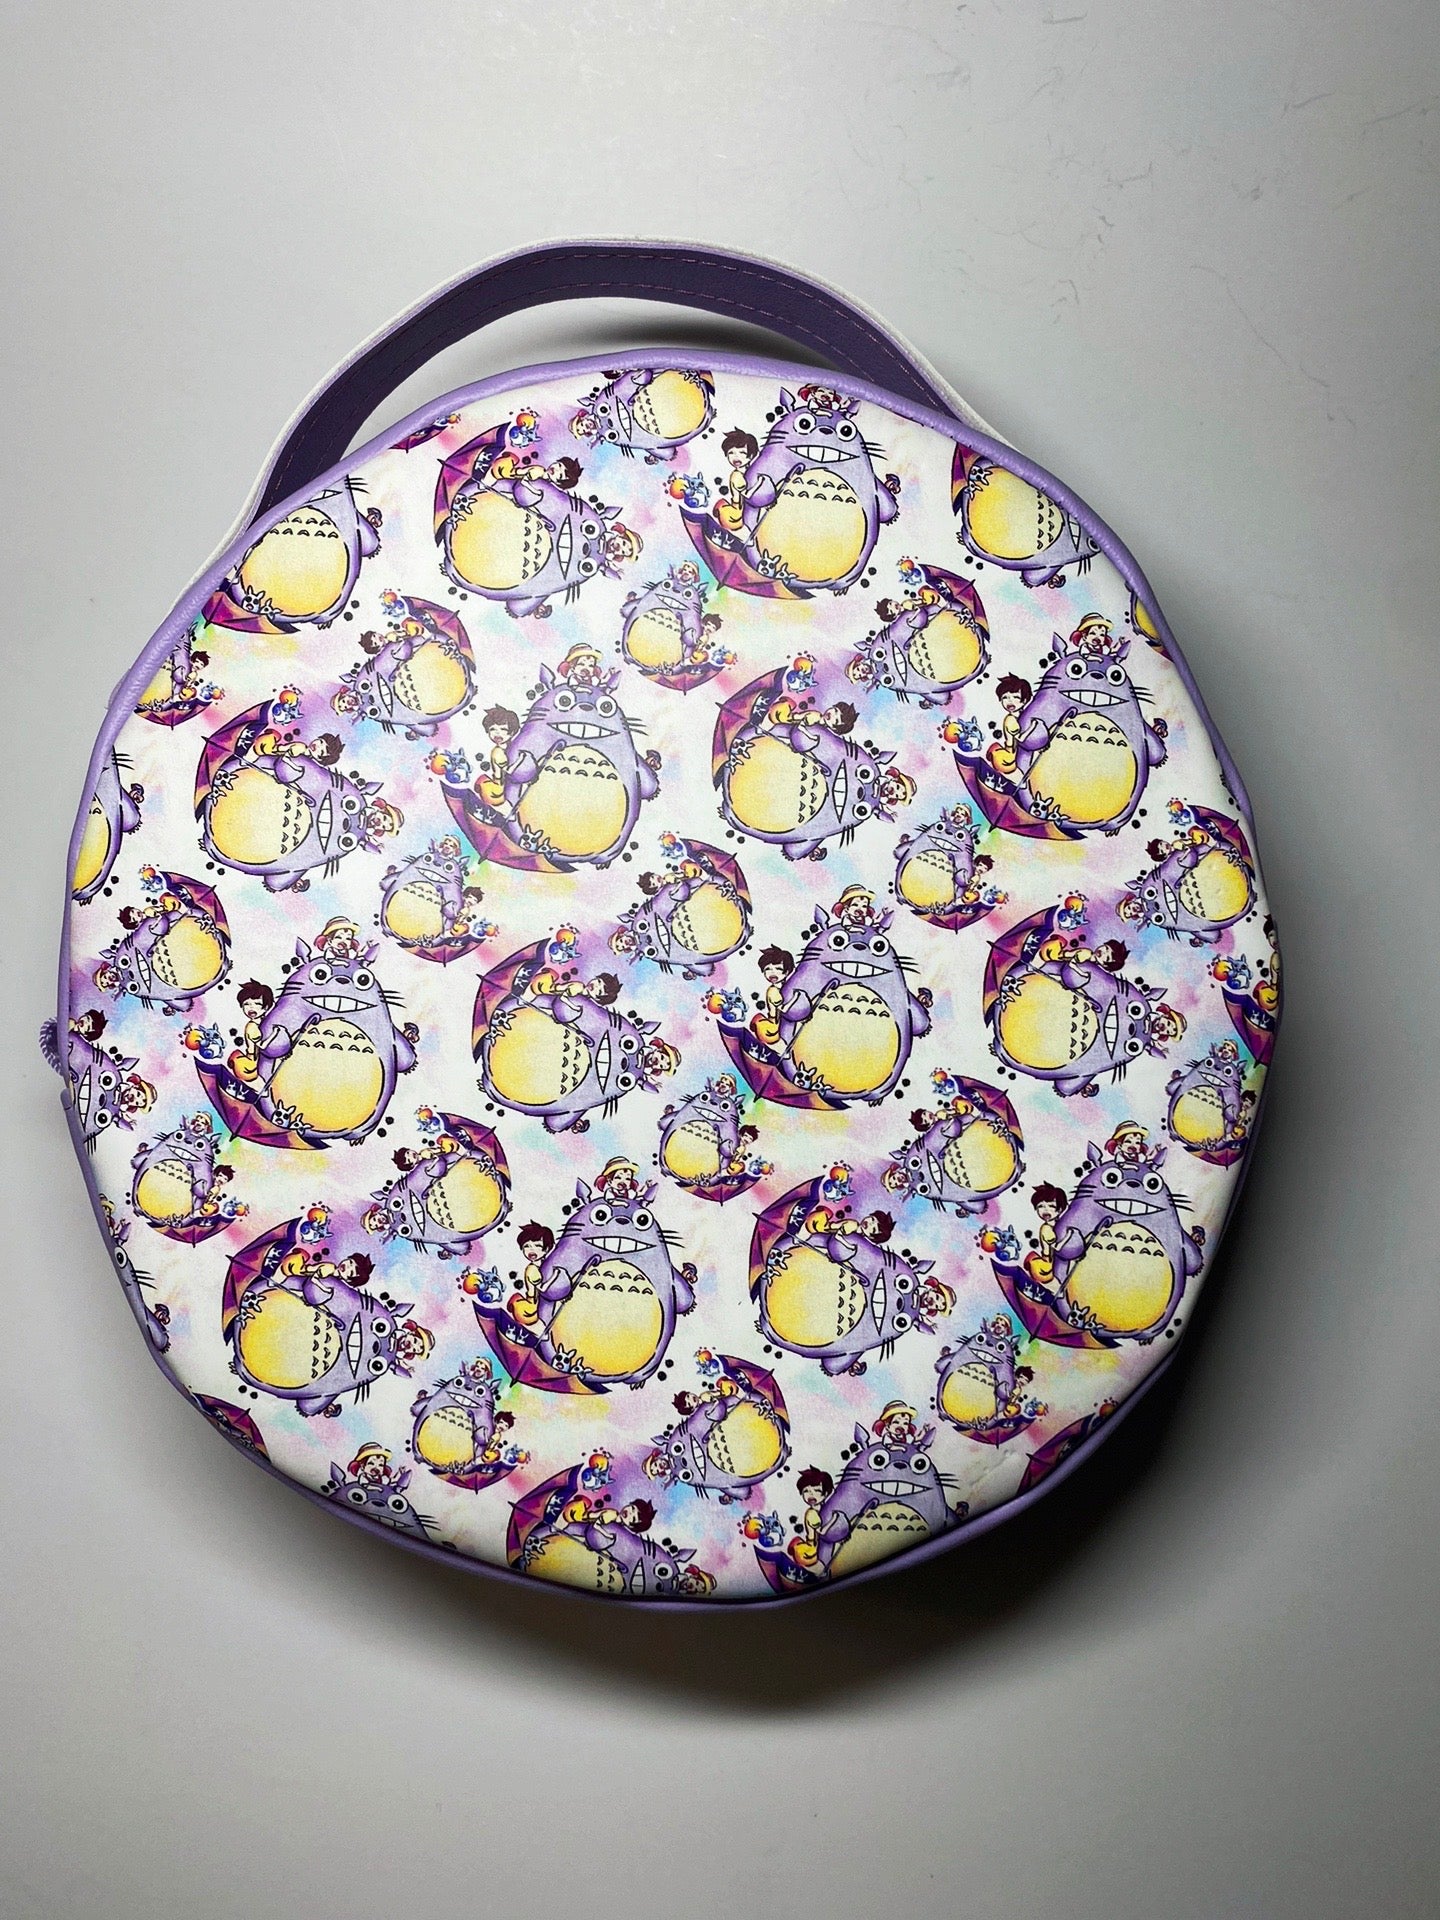 Lavender circle Totoro bag